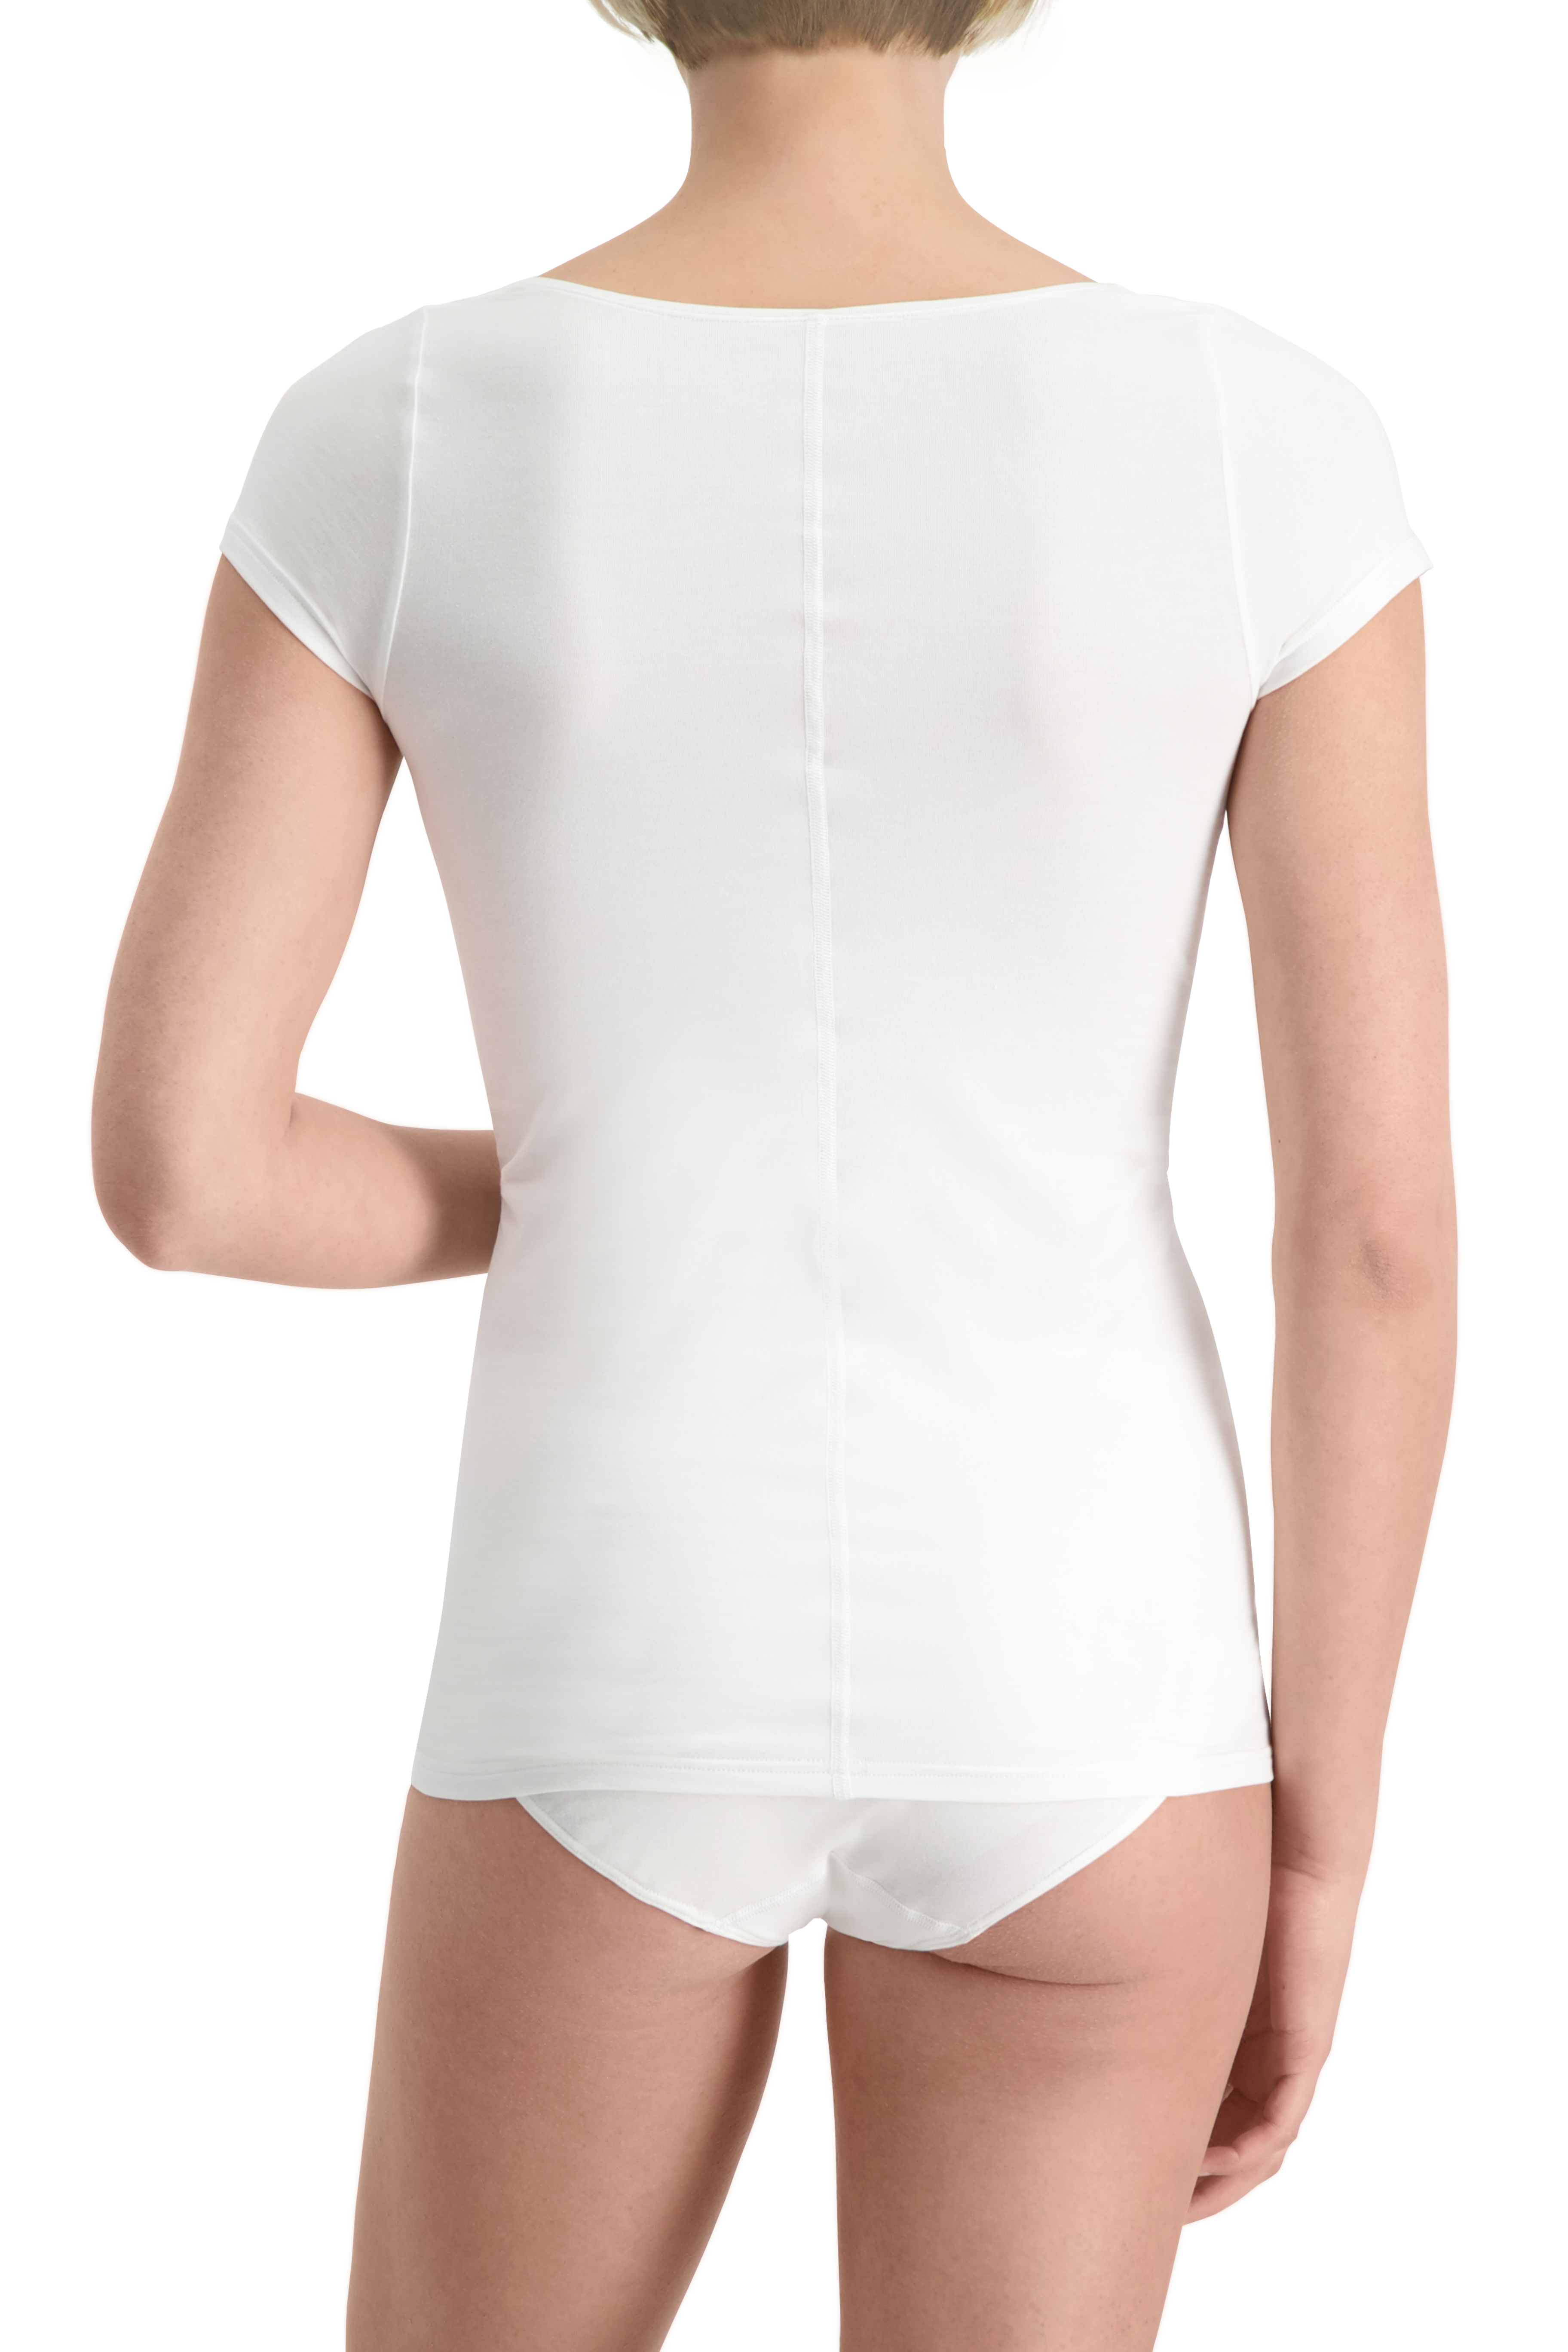 Invisible sleeve for women undershirt short Noshirt -